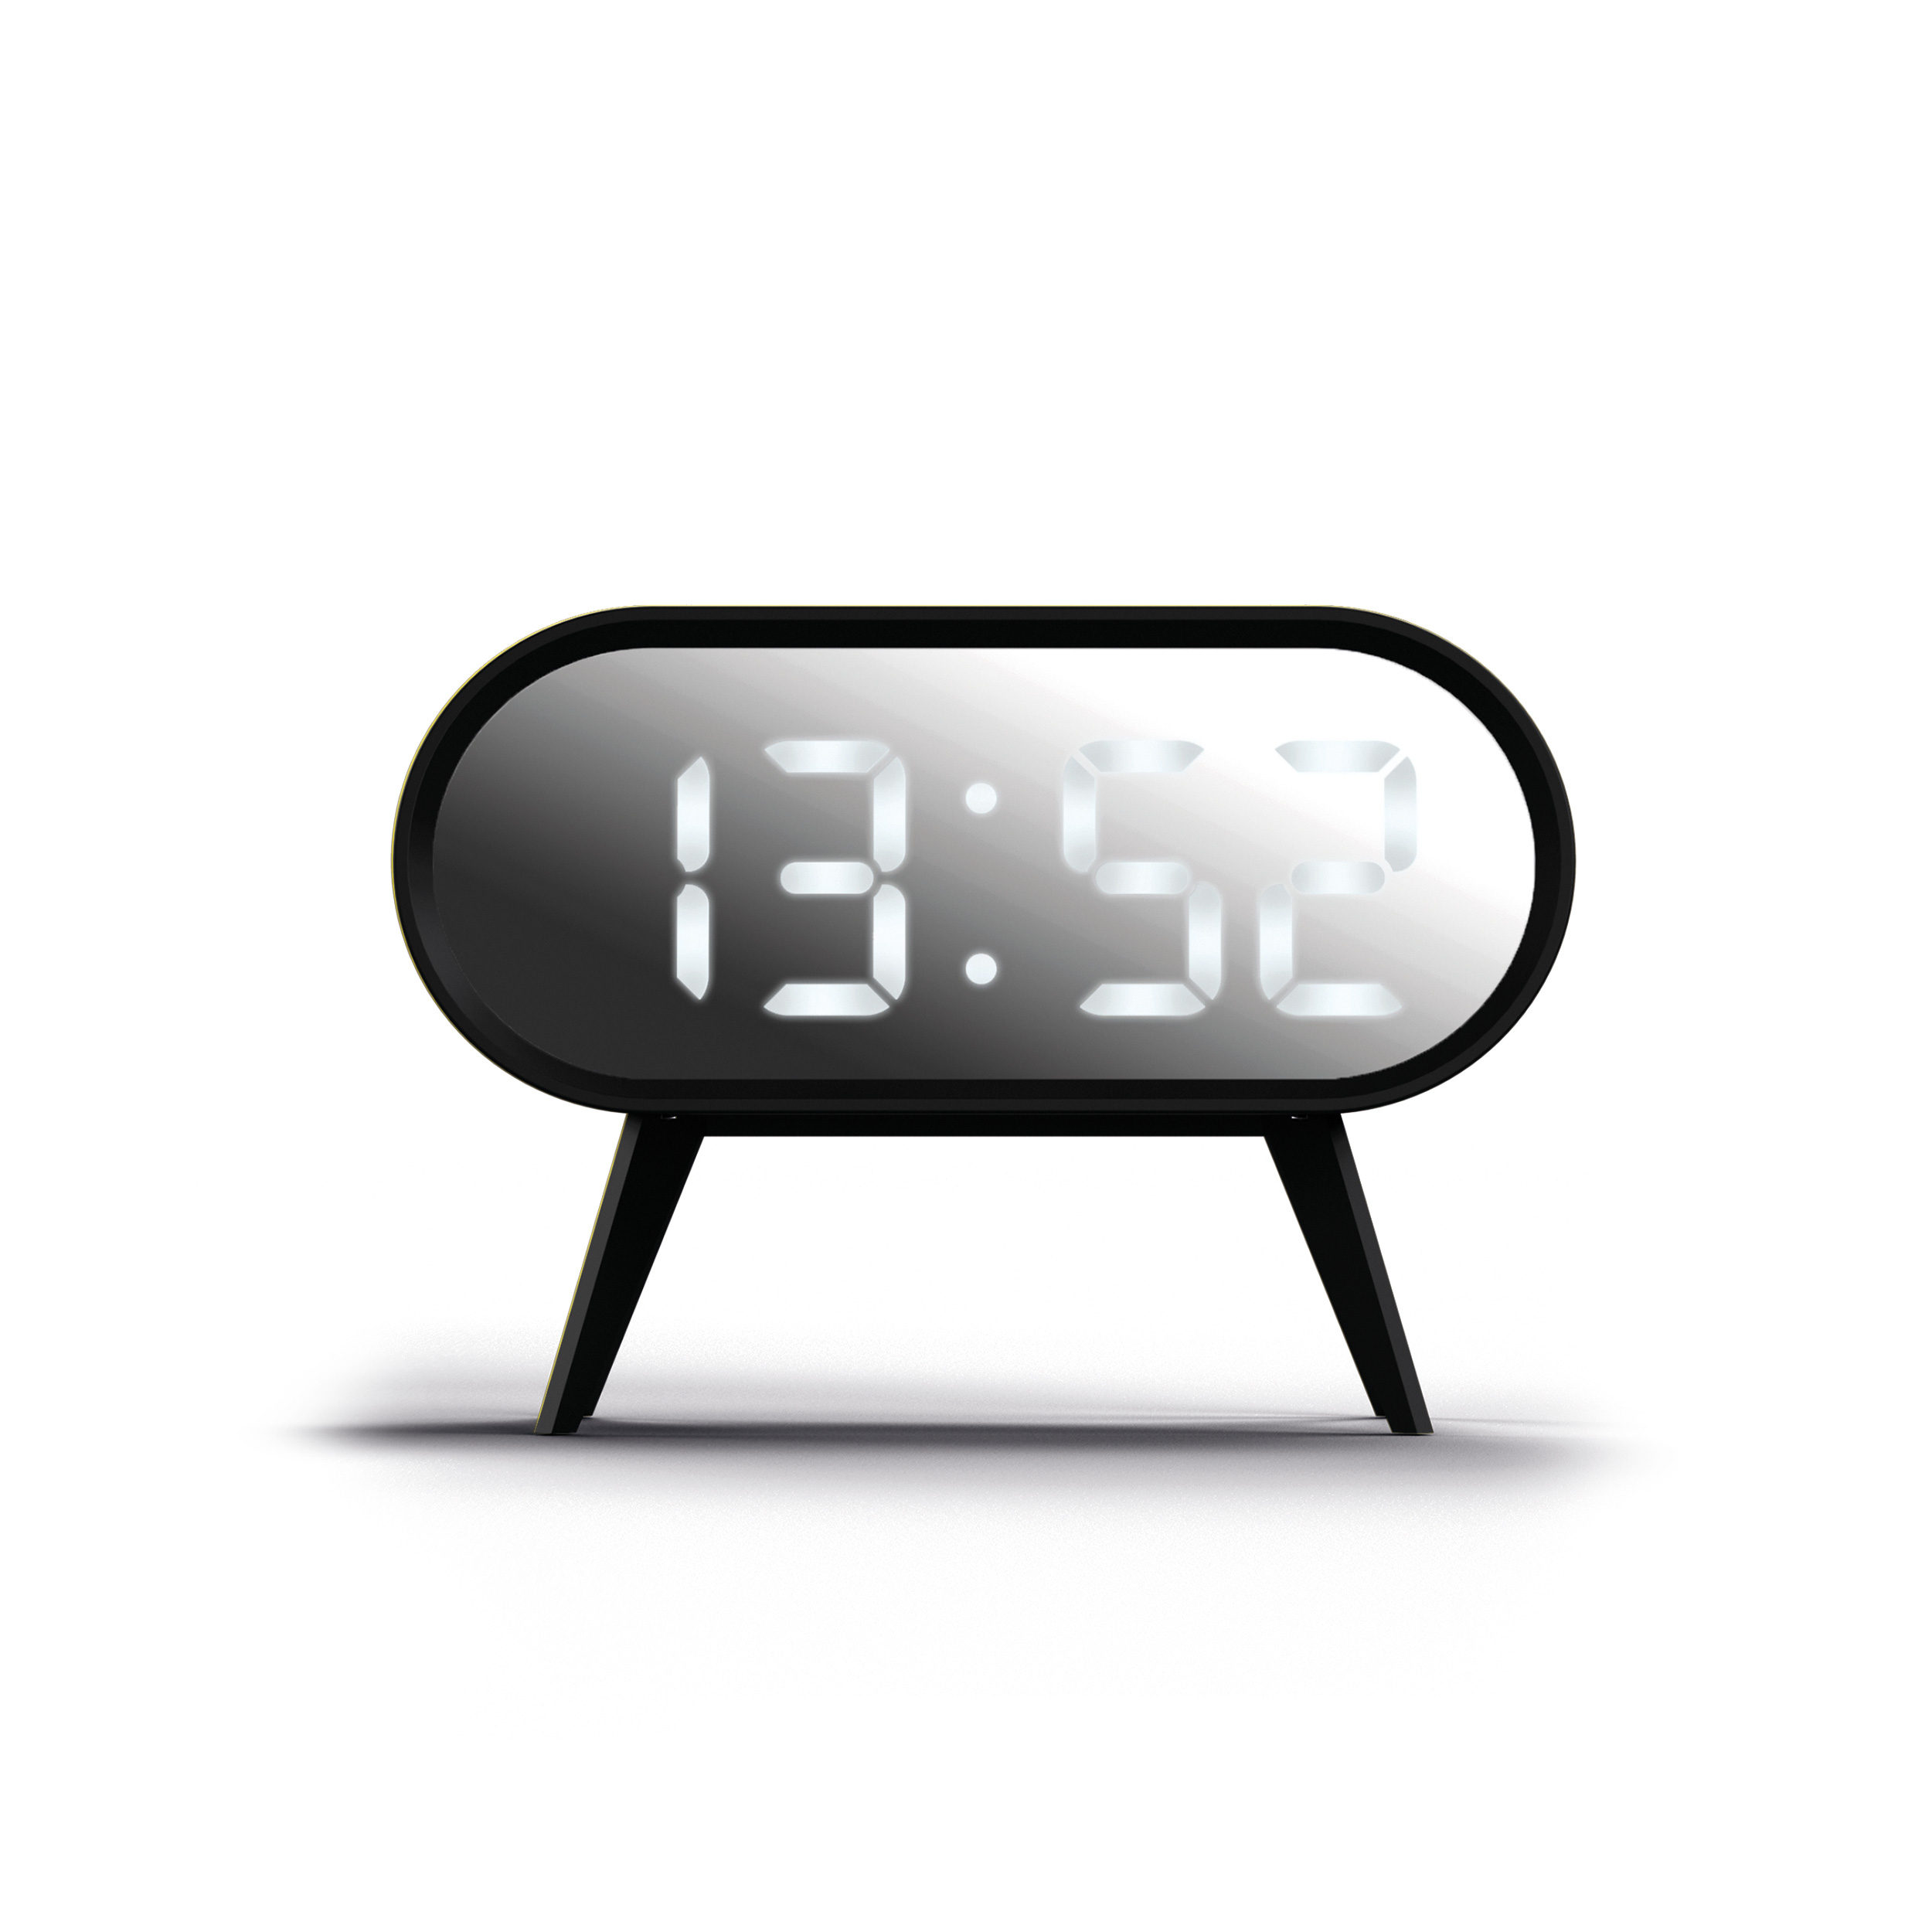 NEWGATE ’Cyborg Digital’ LED Clock Black